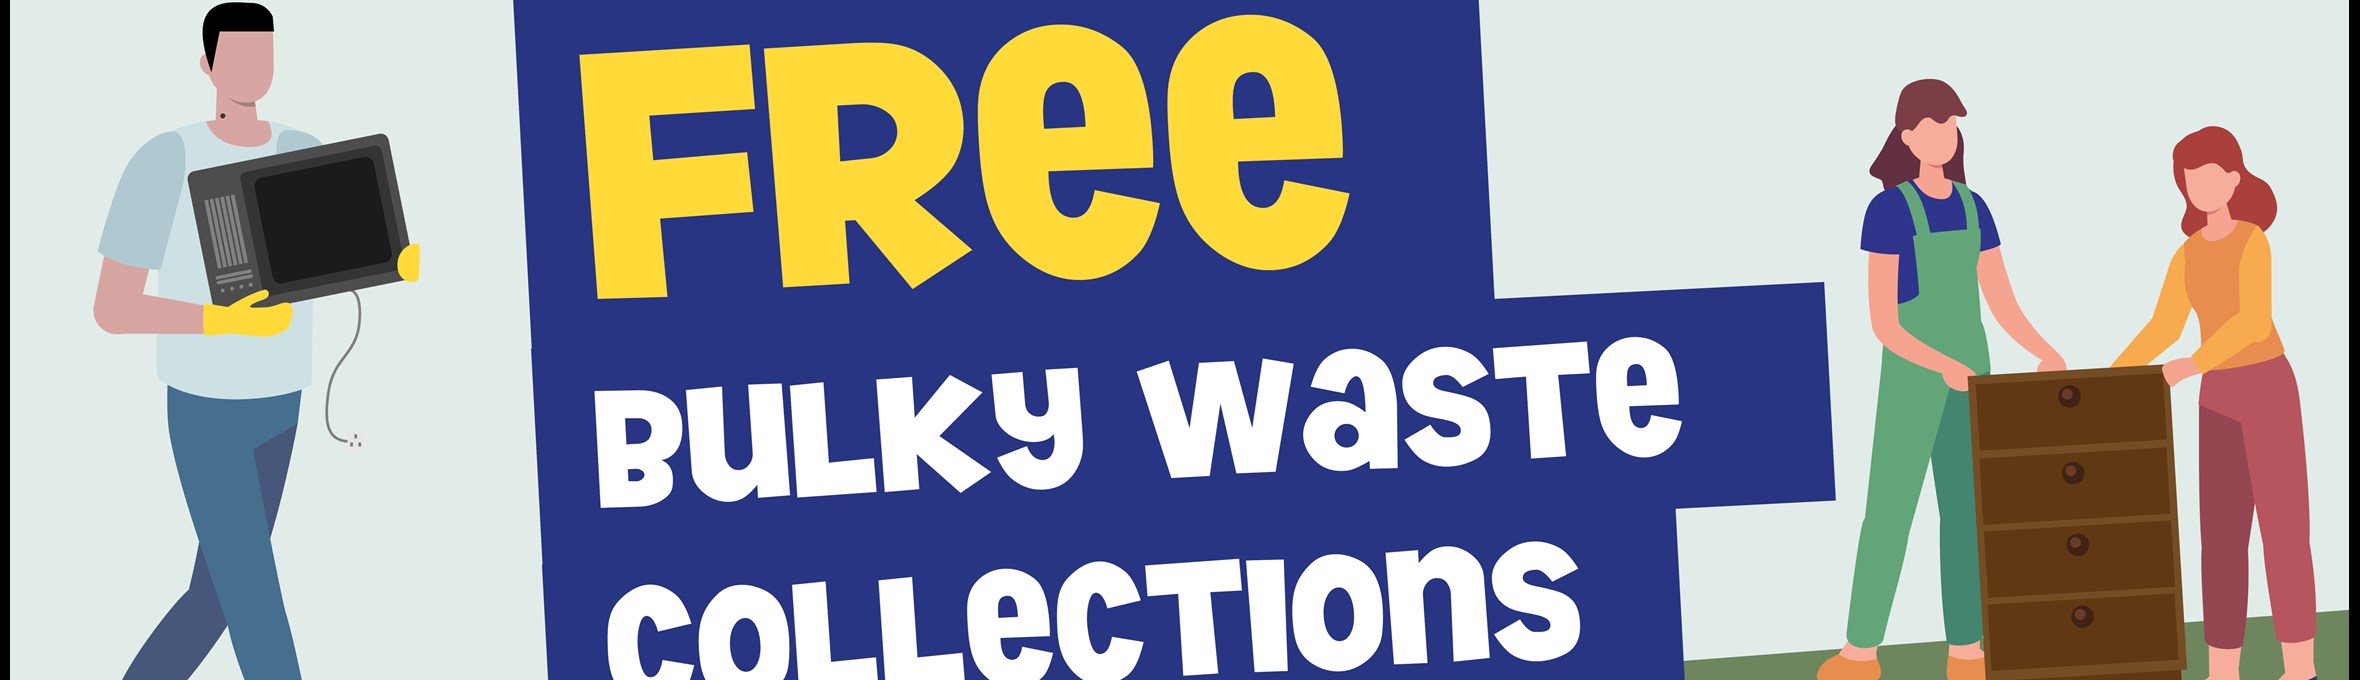 Free bulky waste collections www.ashfield.gov.uk/bulkywaste